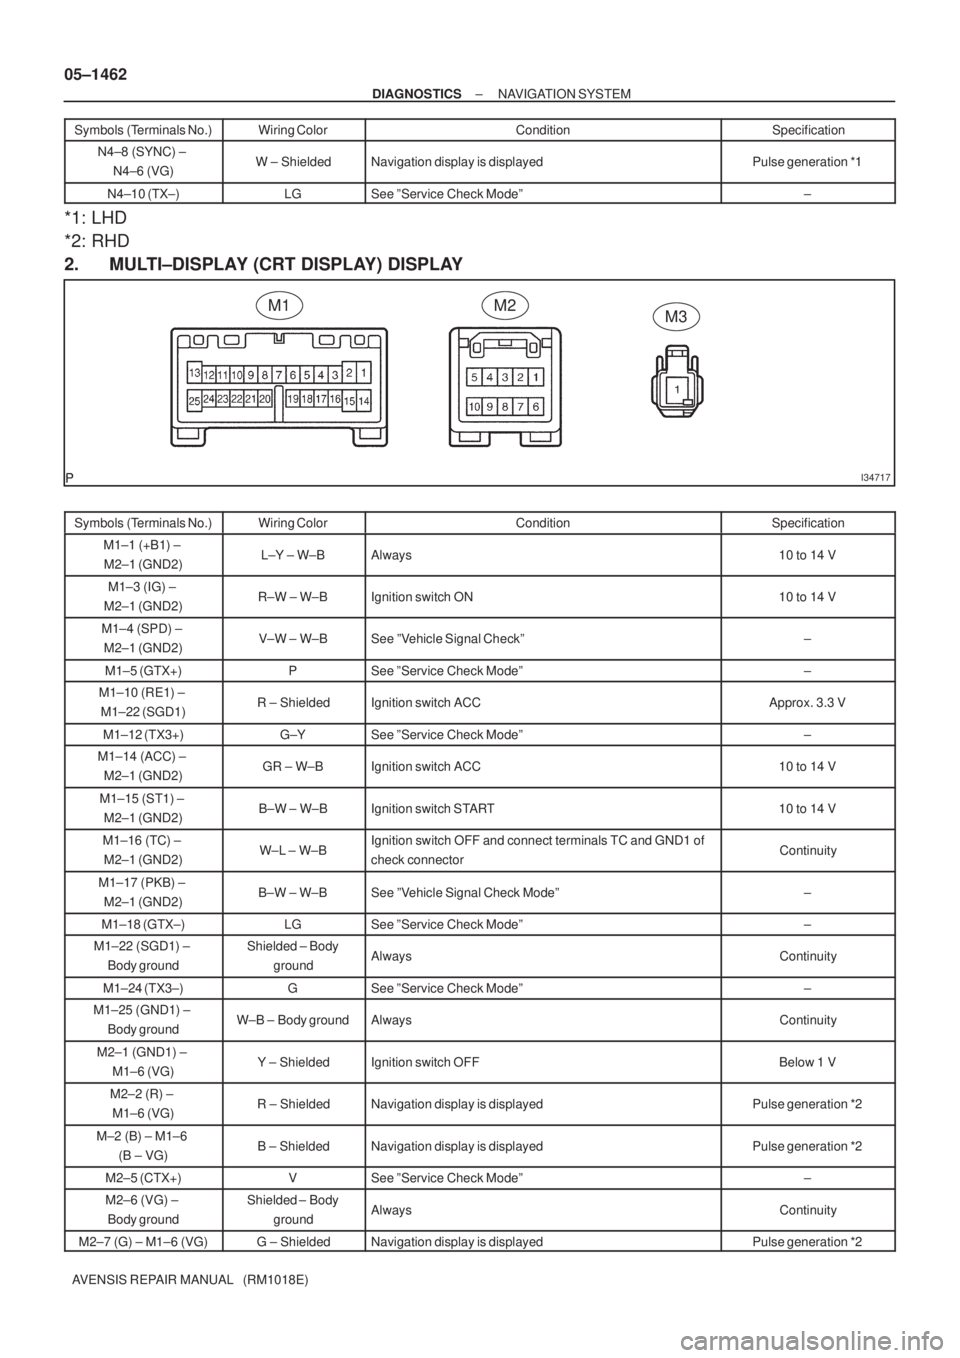 TOYOTA AVENSIS 2005  Service Repair Manual I34717
M1M2M3 05±1462
± DIAGNOSTICSNAVIGATION SYSTEM
AVENSIS REPAIR MANUAL   (RM1018E)Symbols (Terminals No.)Specification Condition Wiring Color
N4±8 (SYNC) ± 
N4±6 (VG)W ± ShieldedNavigation d